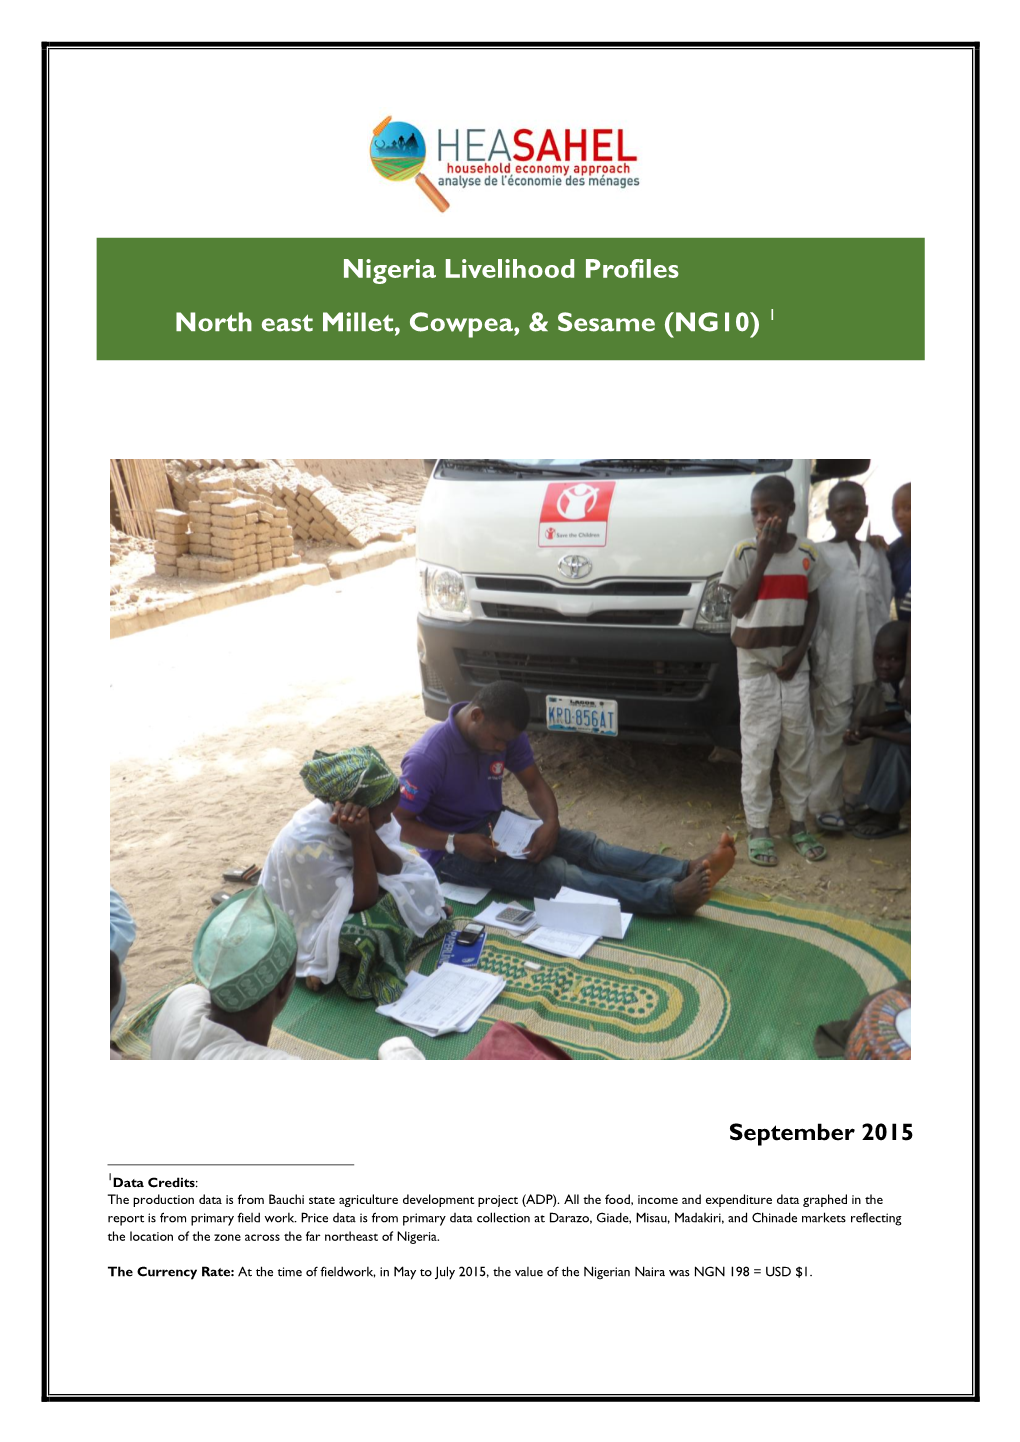 Nigeria Livelihood Profiles North East Millet, Cowpea, & Sesame (NG10) 1